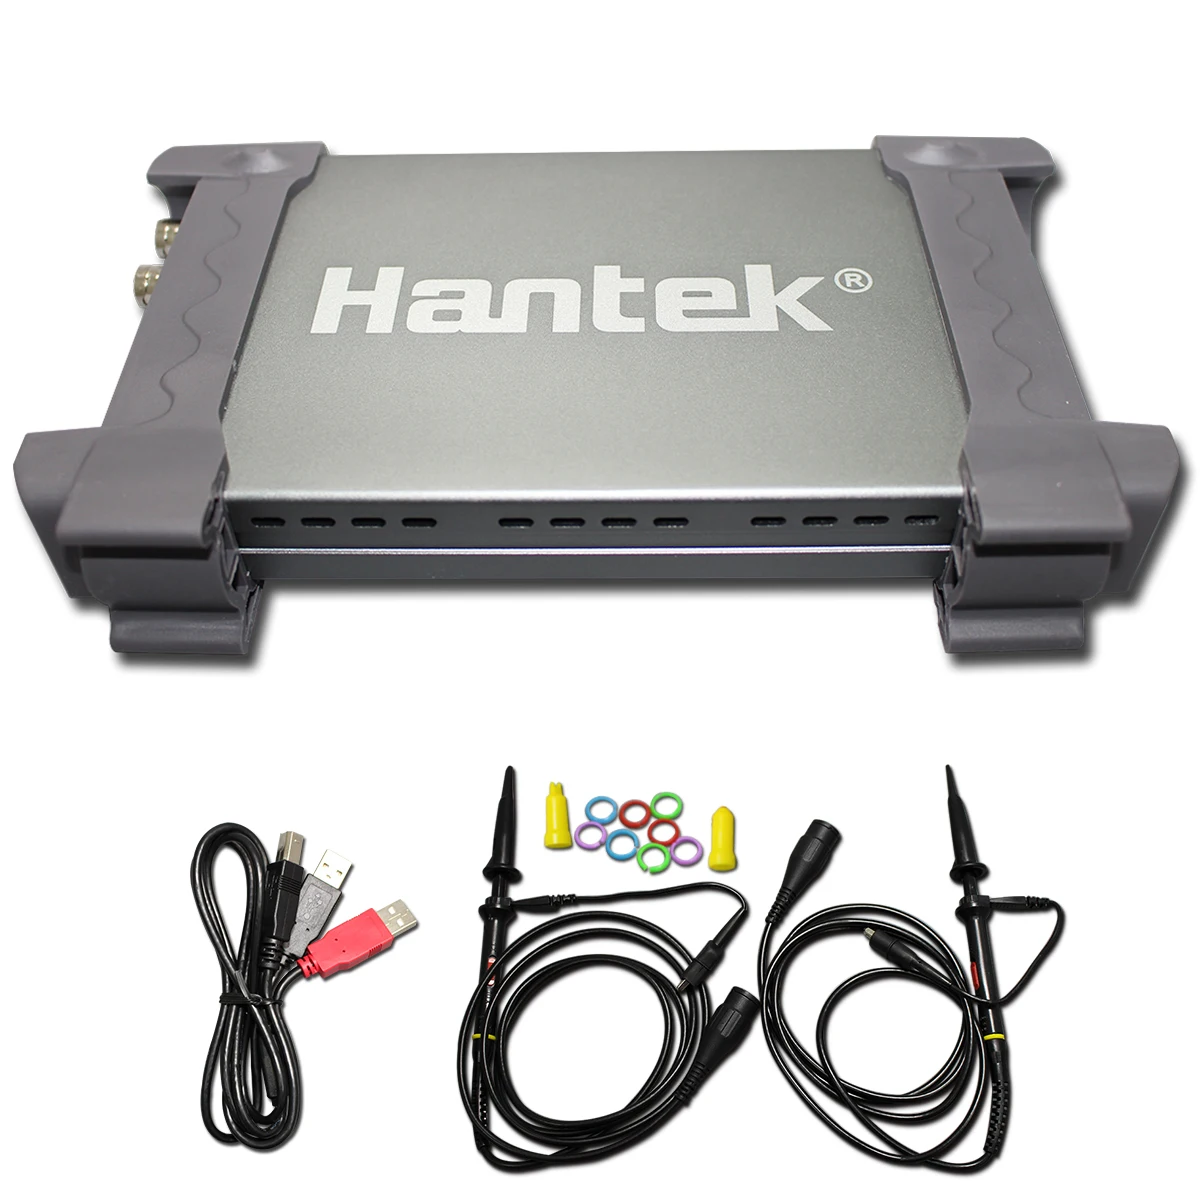 Hantek 6022BE PC-Based USB Digital Storag Oscilloscope 2Channels 20MHz 48MSa/s with original box